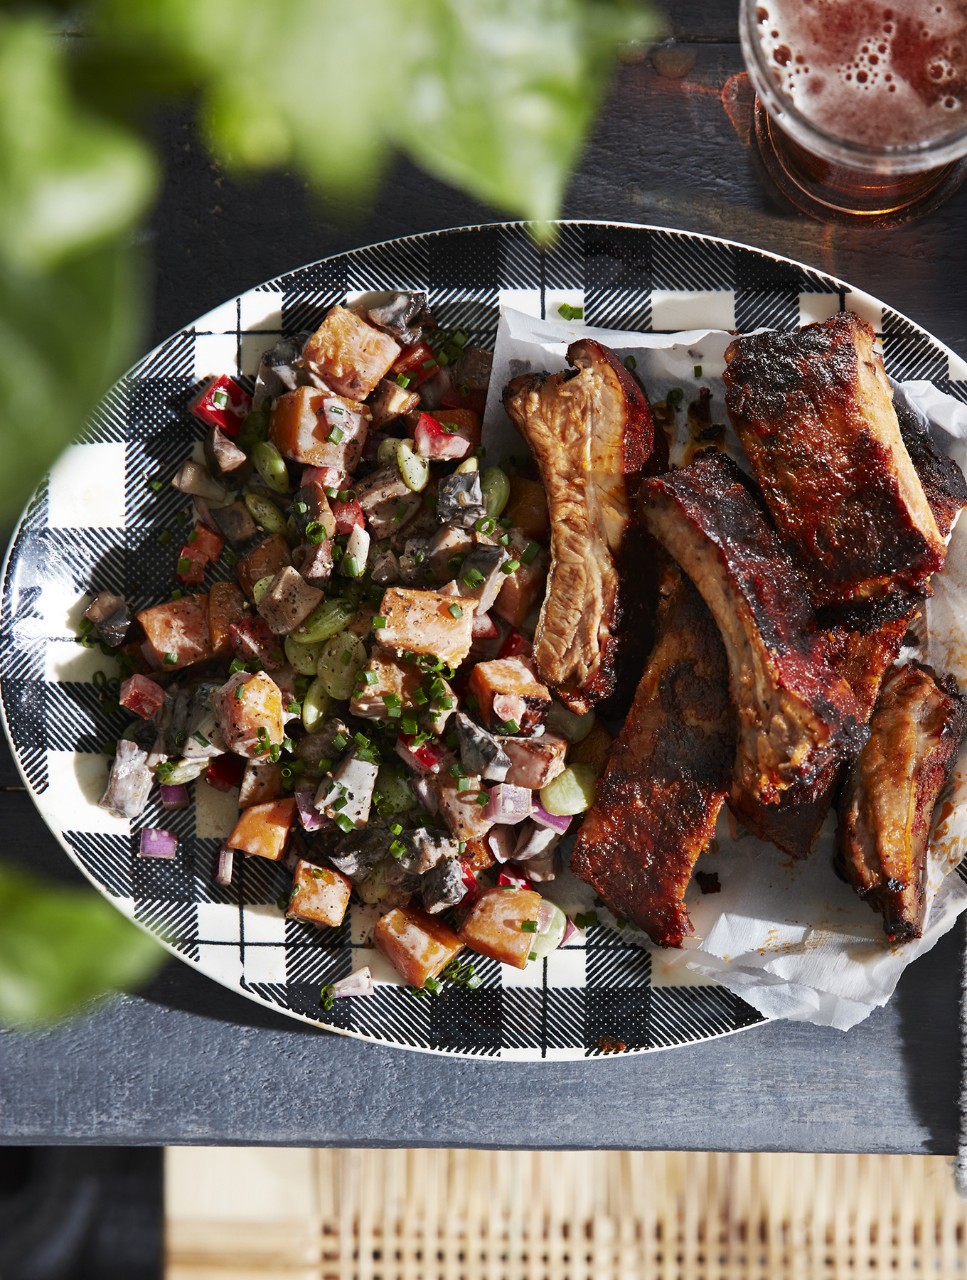 Southern Barbecue Ribs with Squash and Mushroom Succotash Salad